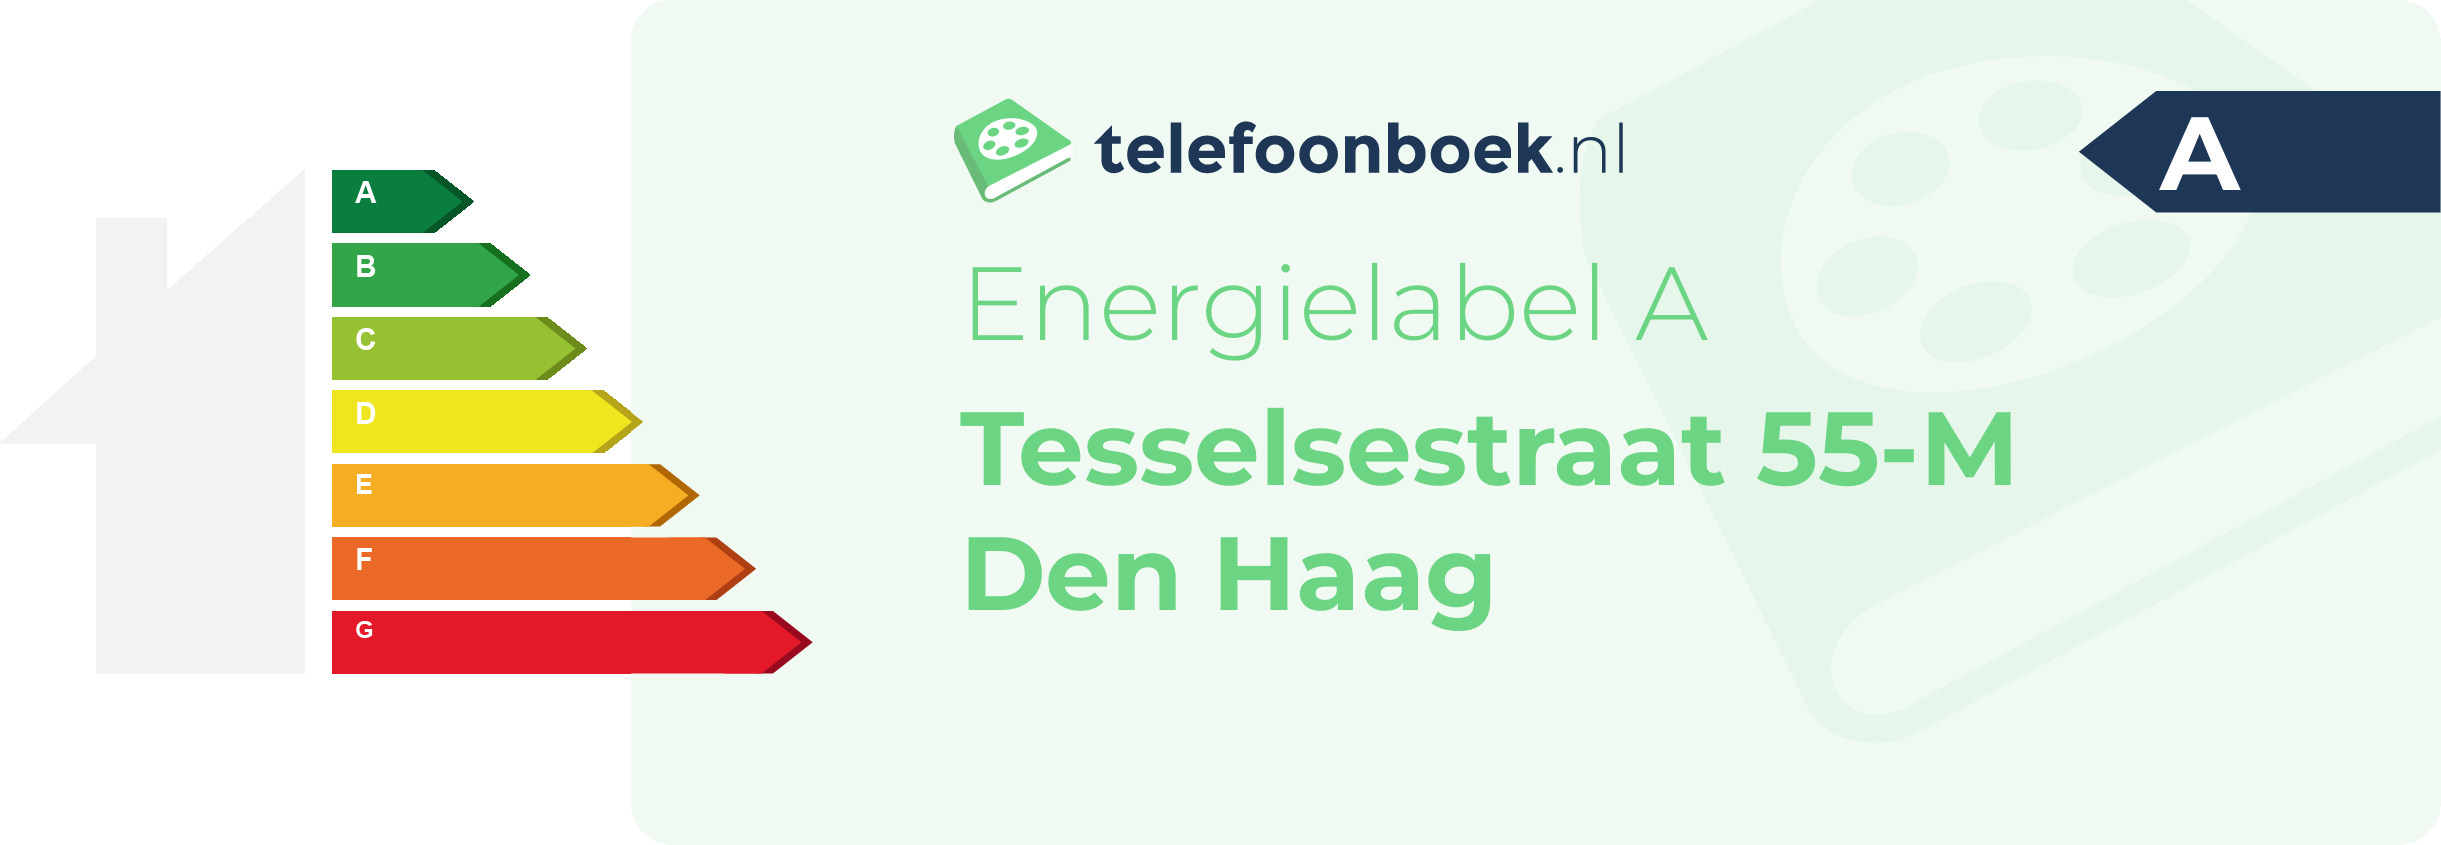 Energielabel Tesselsestraat 55-M Den Haag